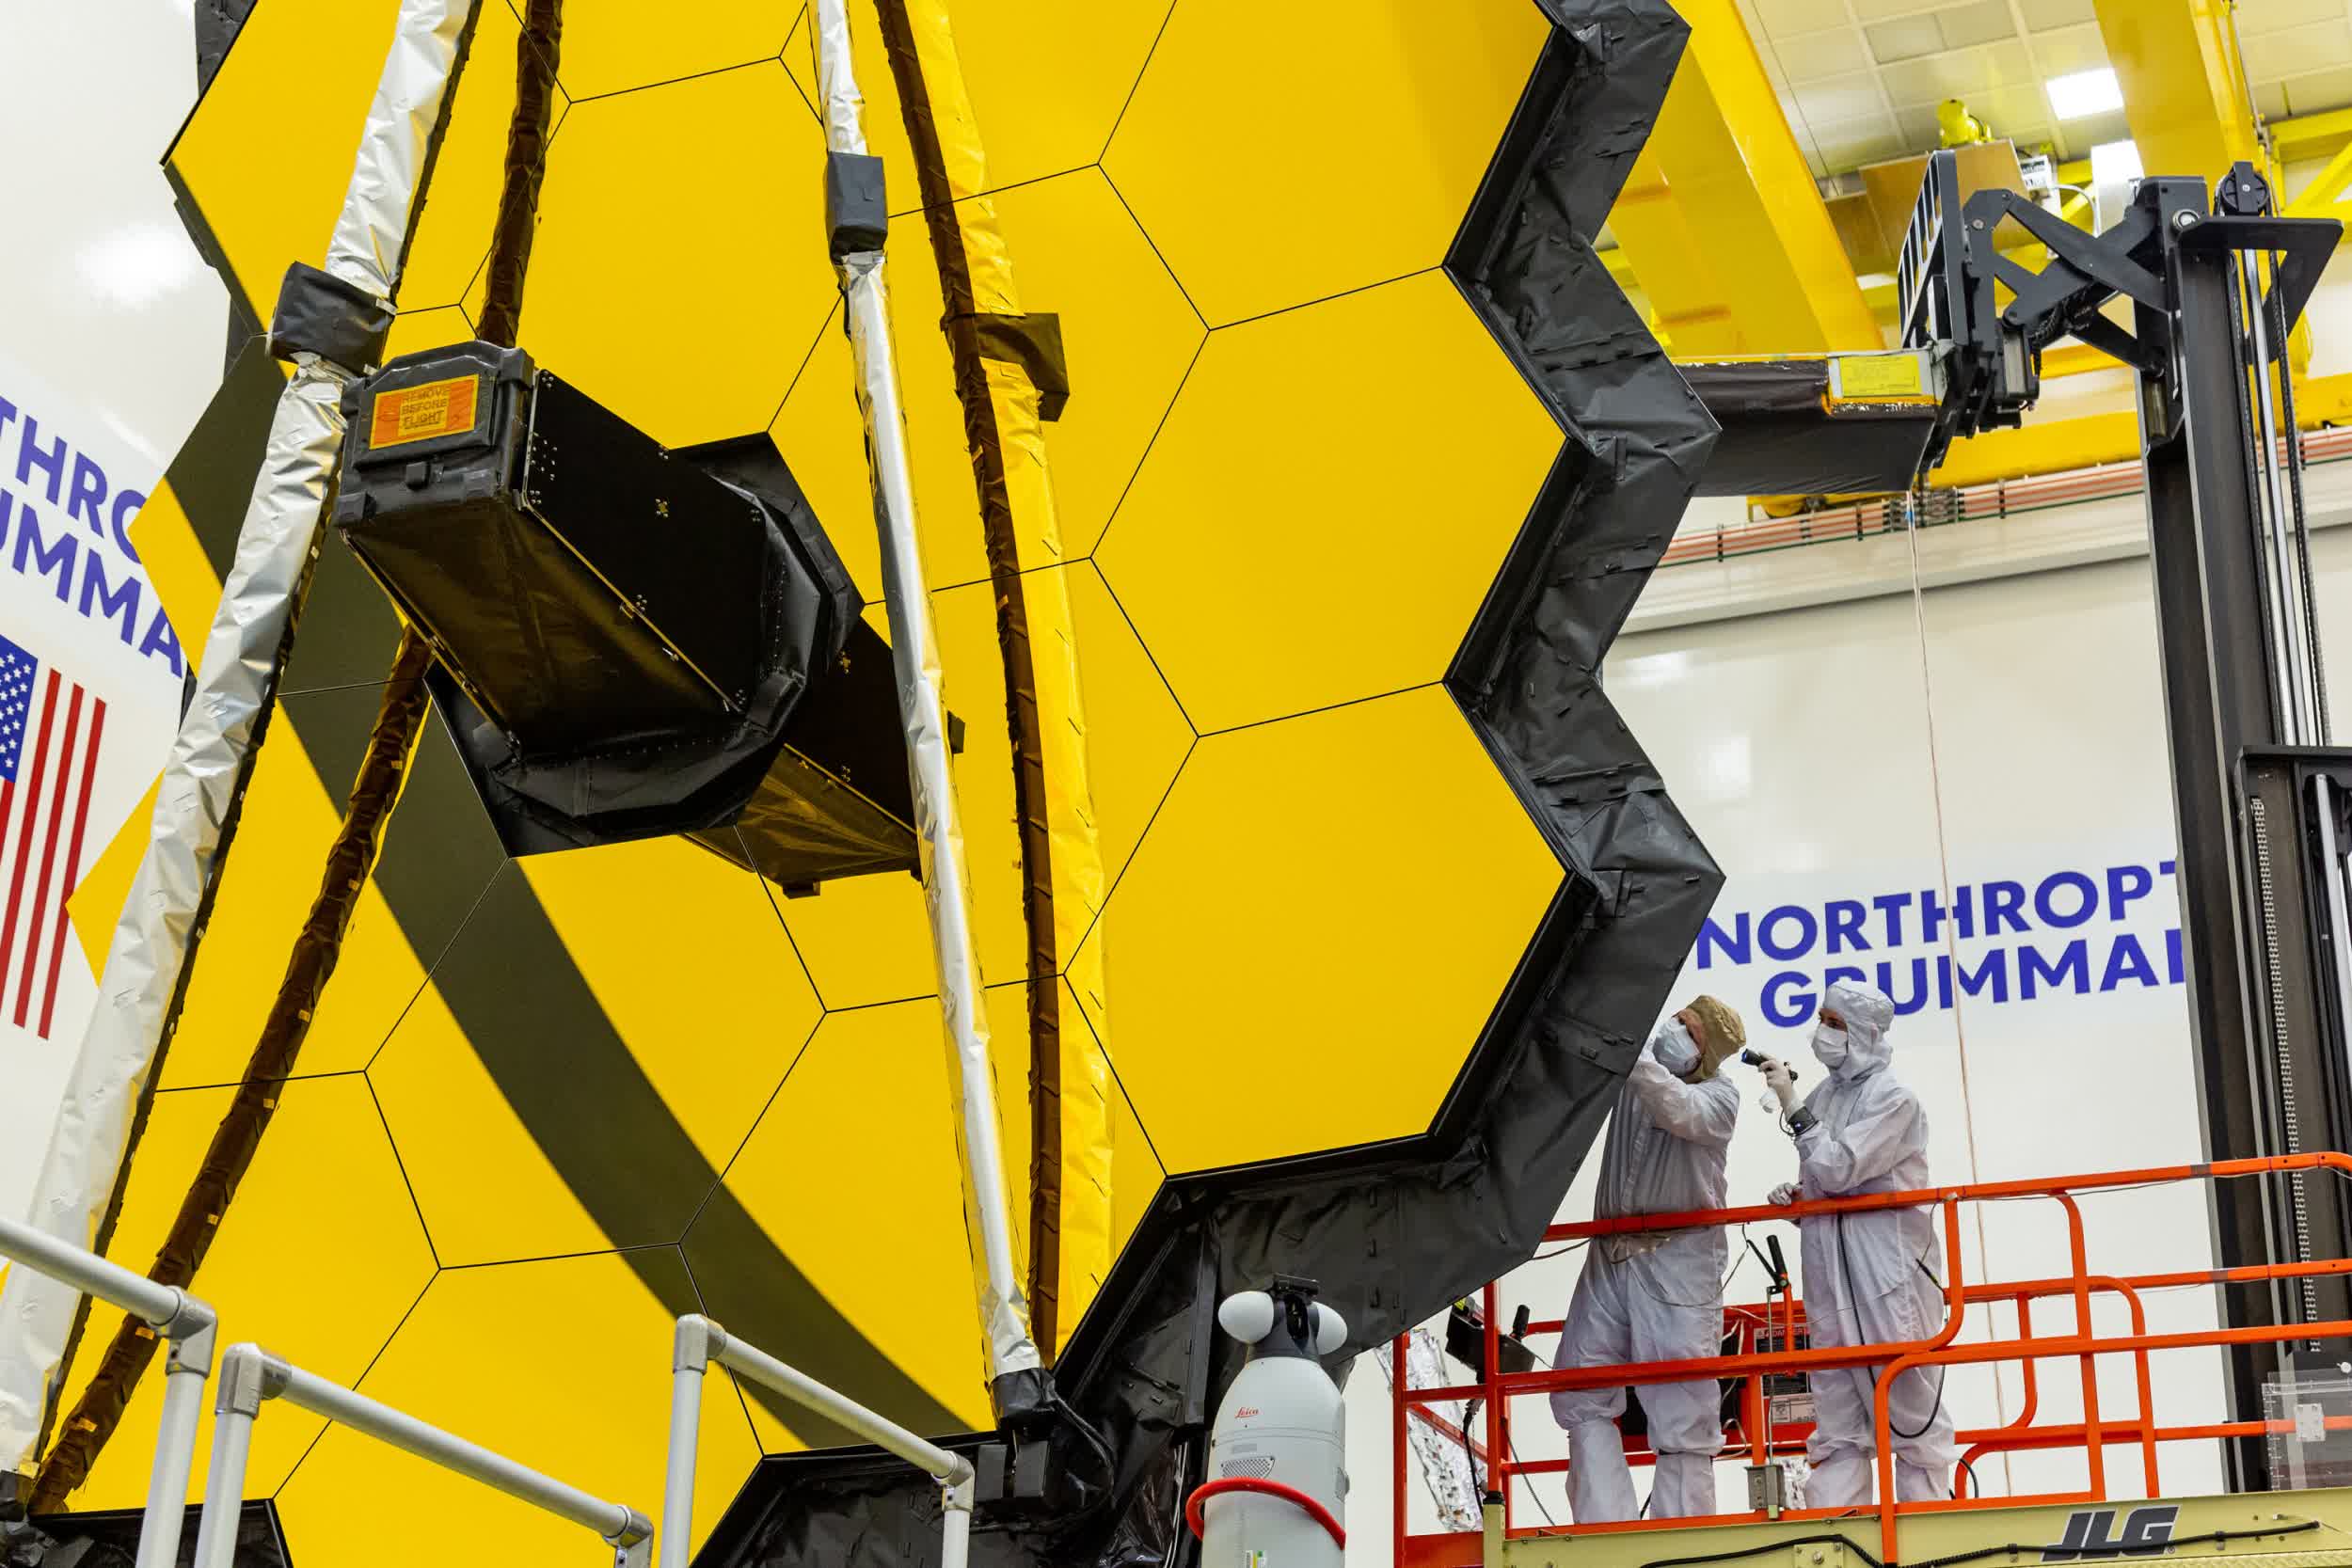 NASA's James Webb Space Telescope is now fully deployed